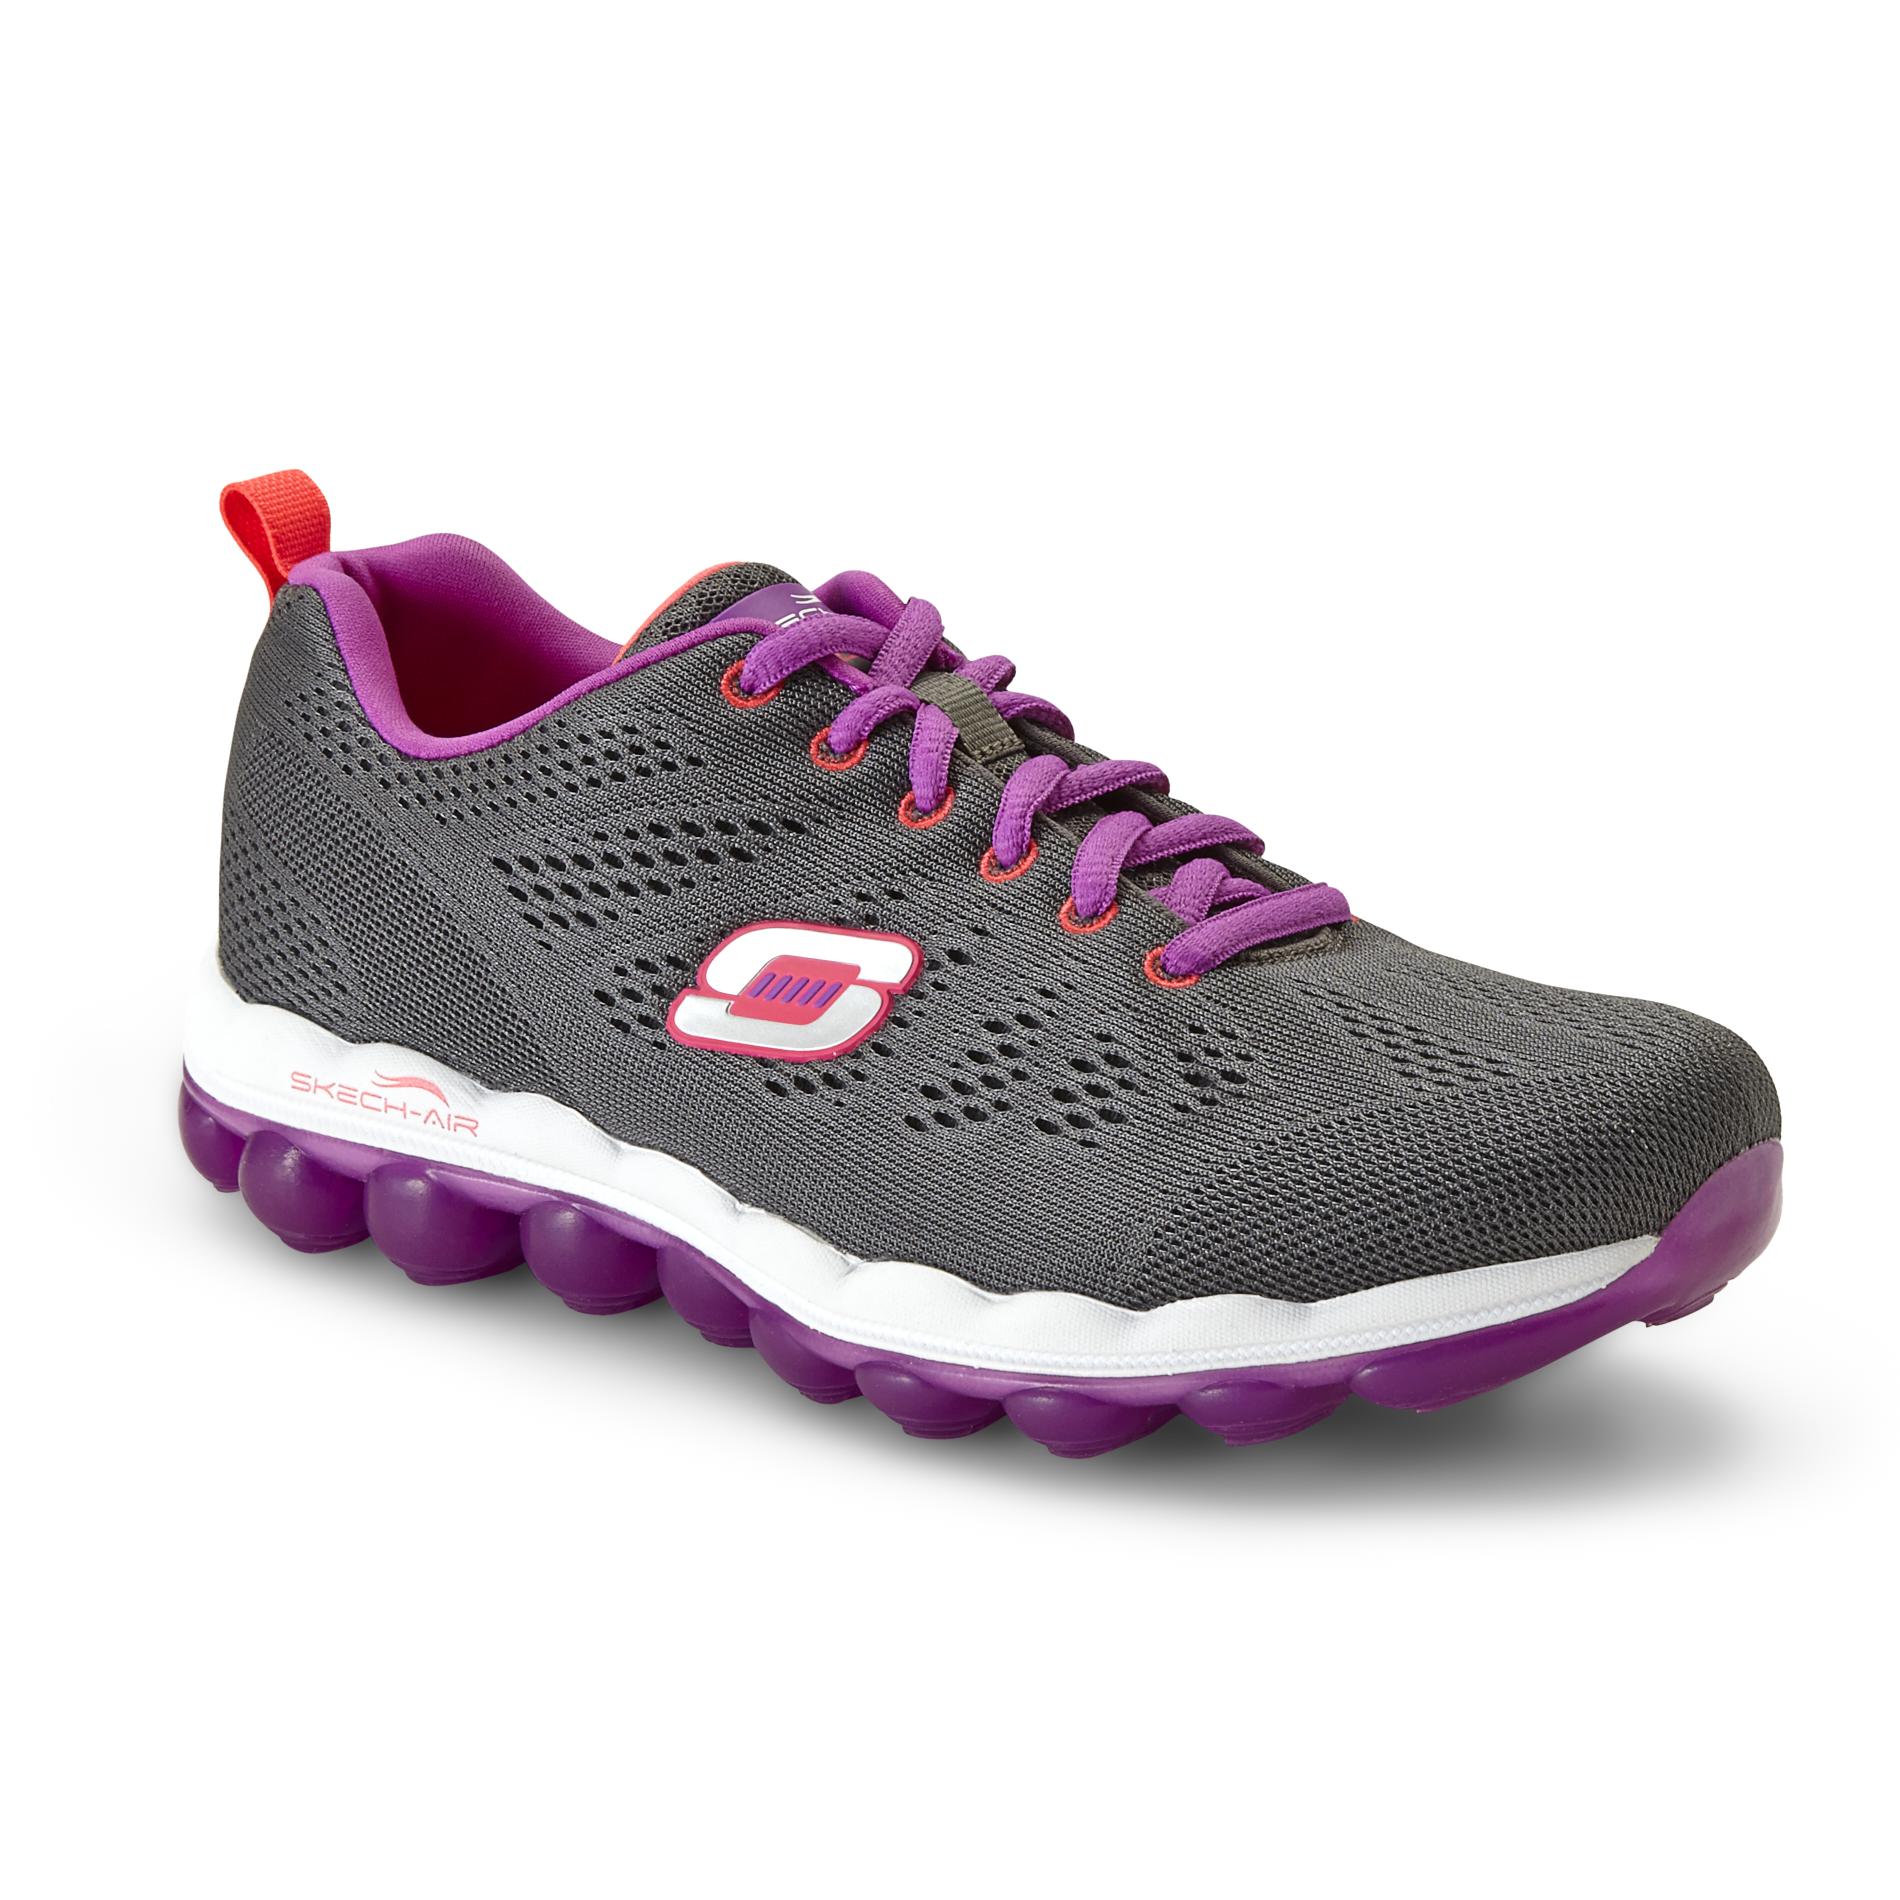 Skechers Women's Skech-Air Inspire Gray/Purple Athletic Shoes